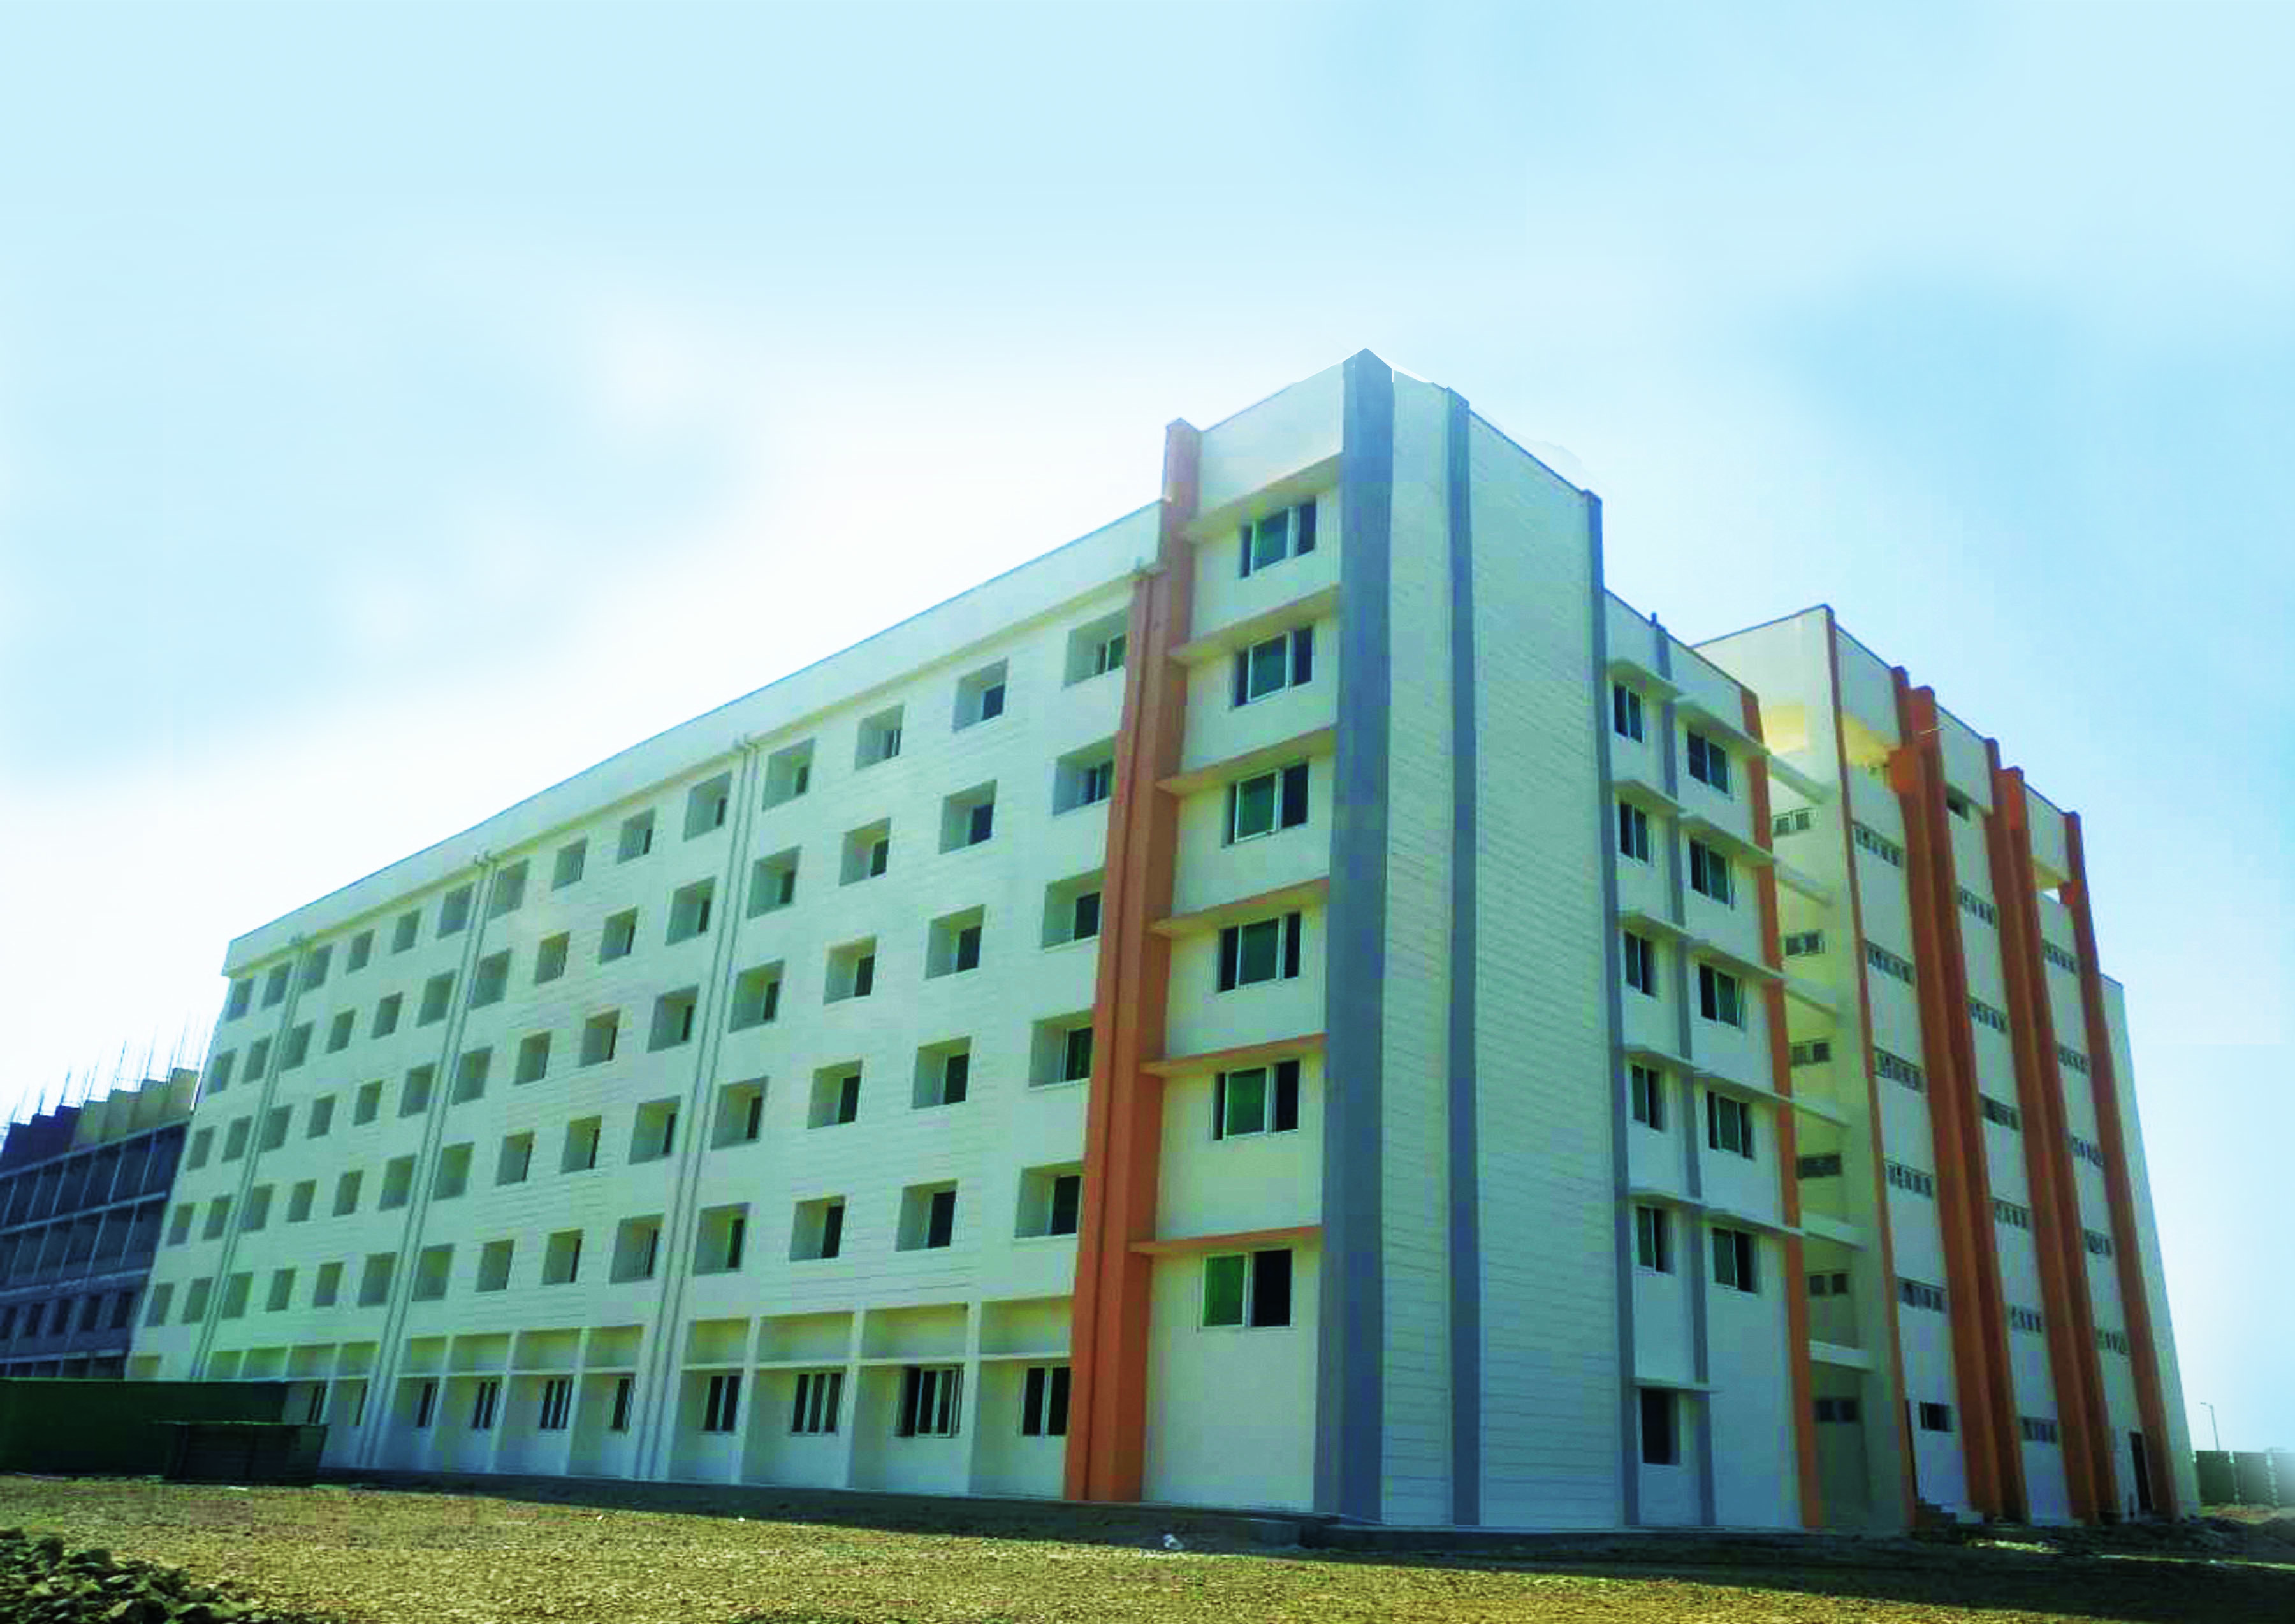 VIT Hostel Block - Bhopal